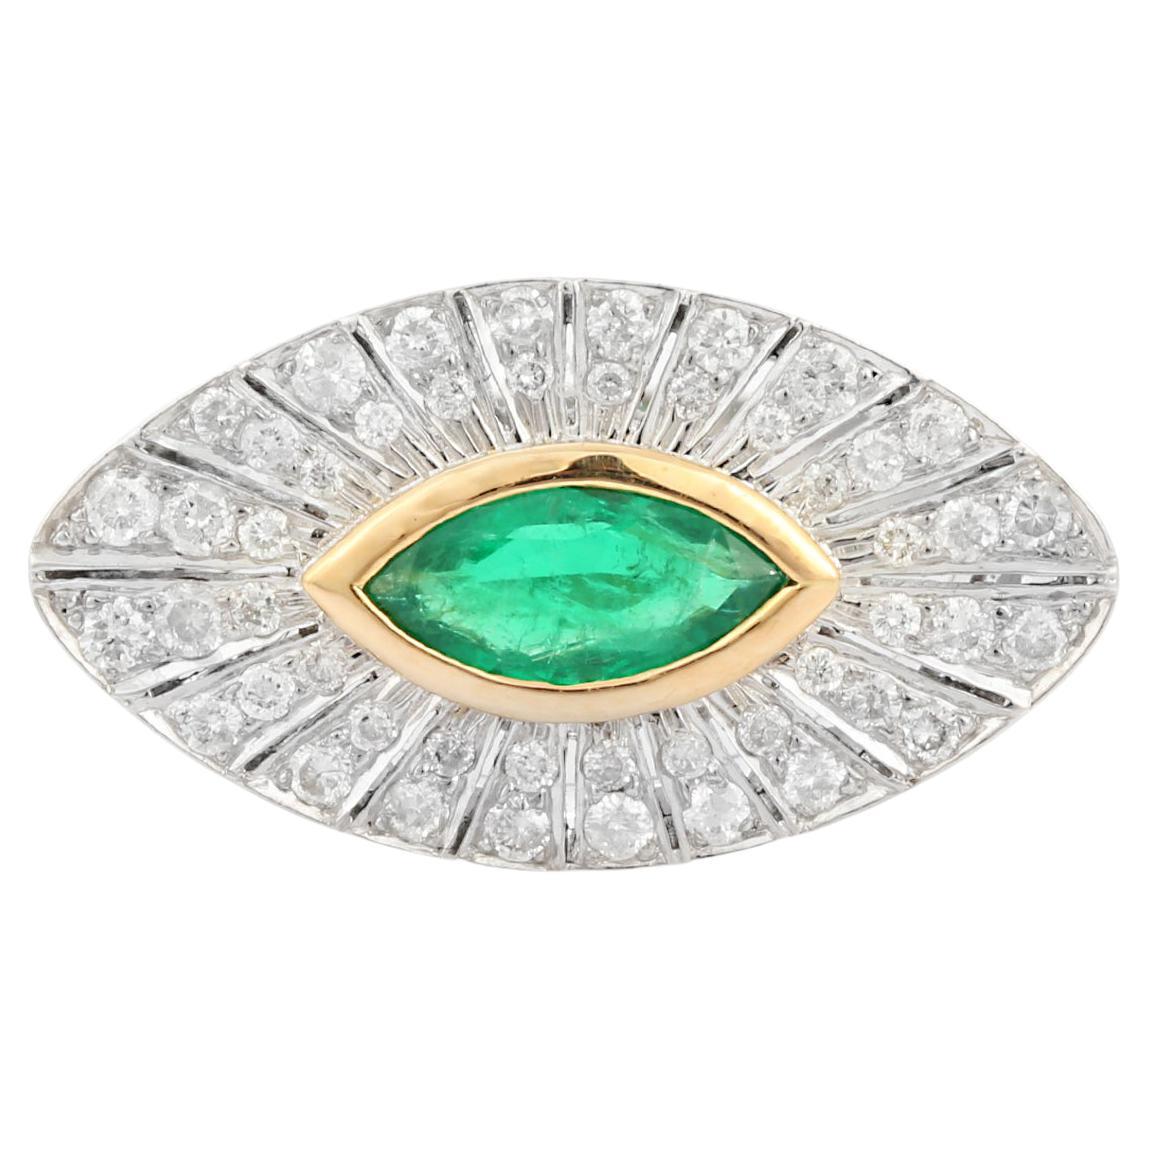 For Sale:  Statement Evil Eye Emerald Diamond Ring in 18 Karat White Gold 2